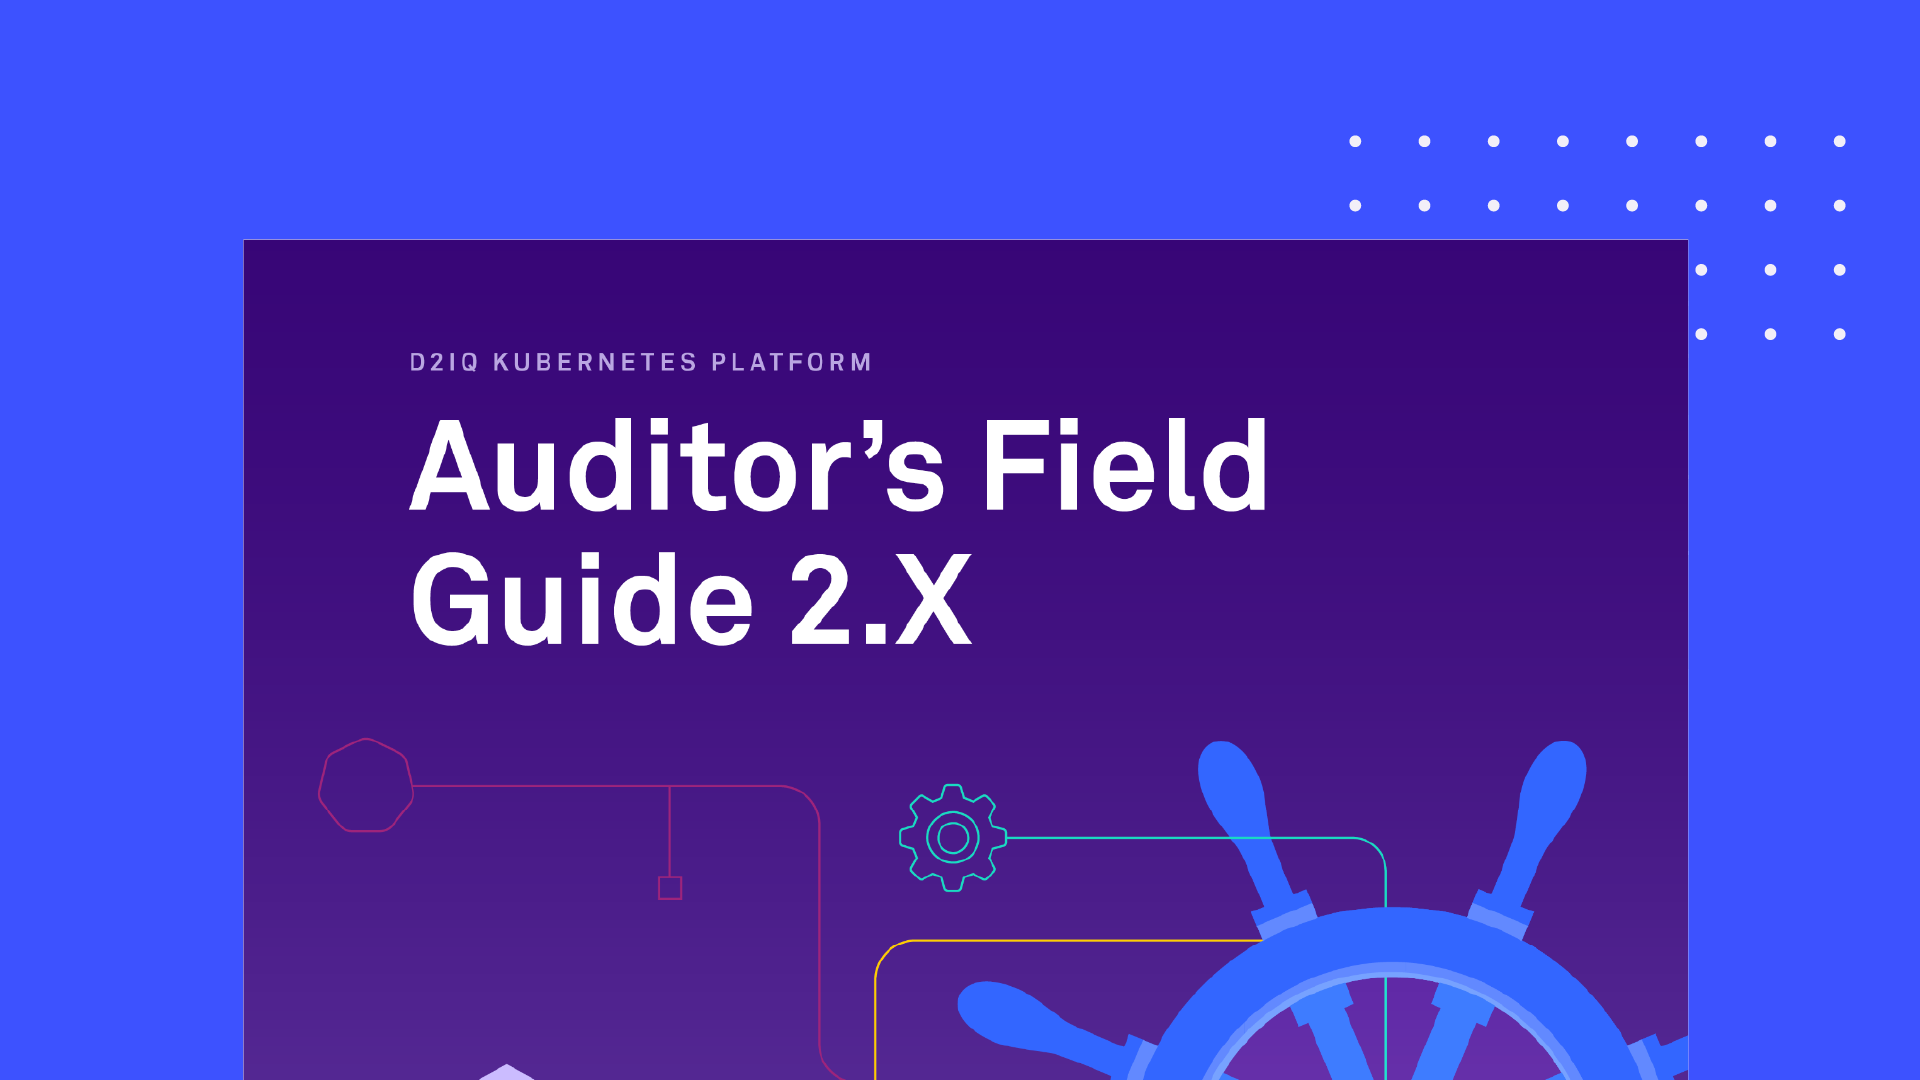 D2iQ Kubernetes Platform Auditor's Field Guide 2.X